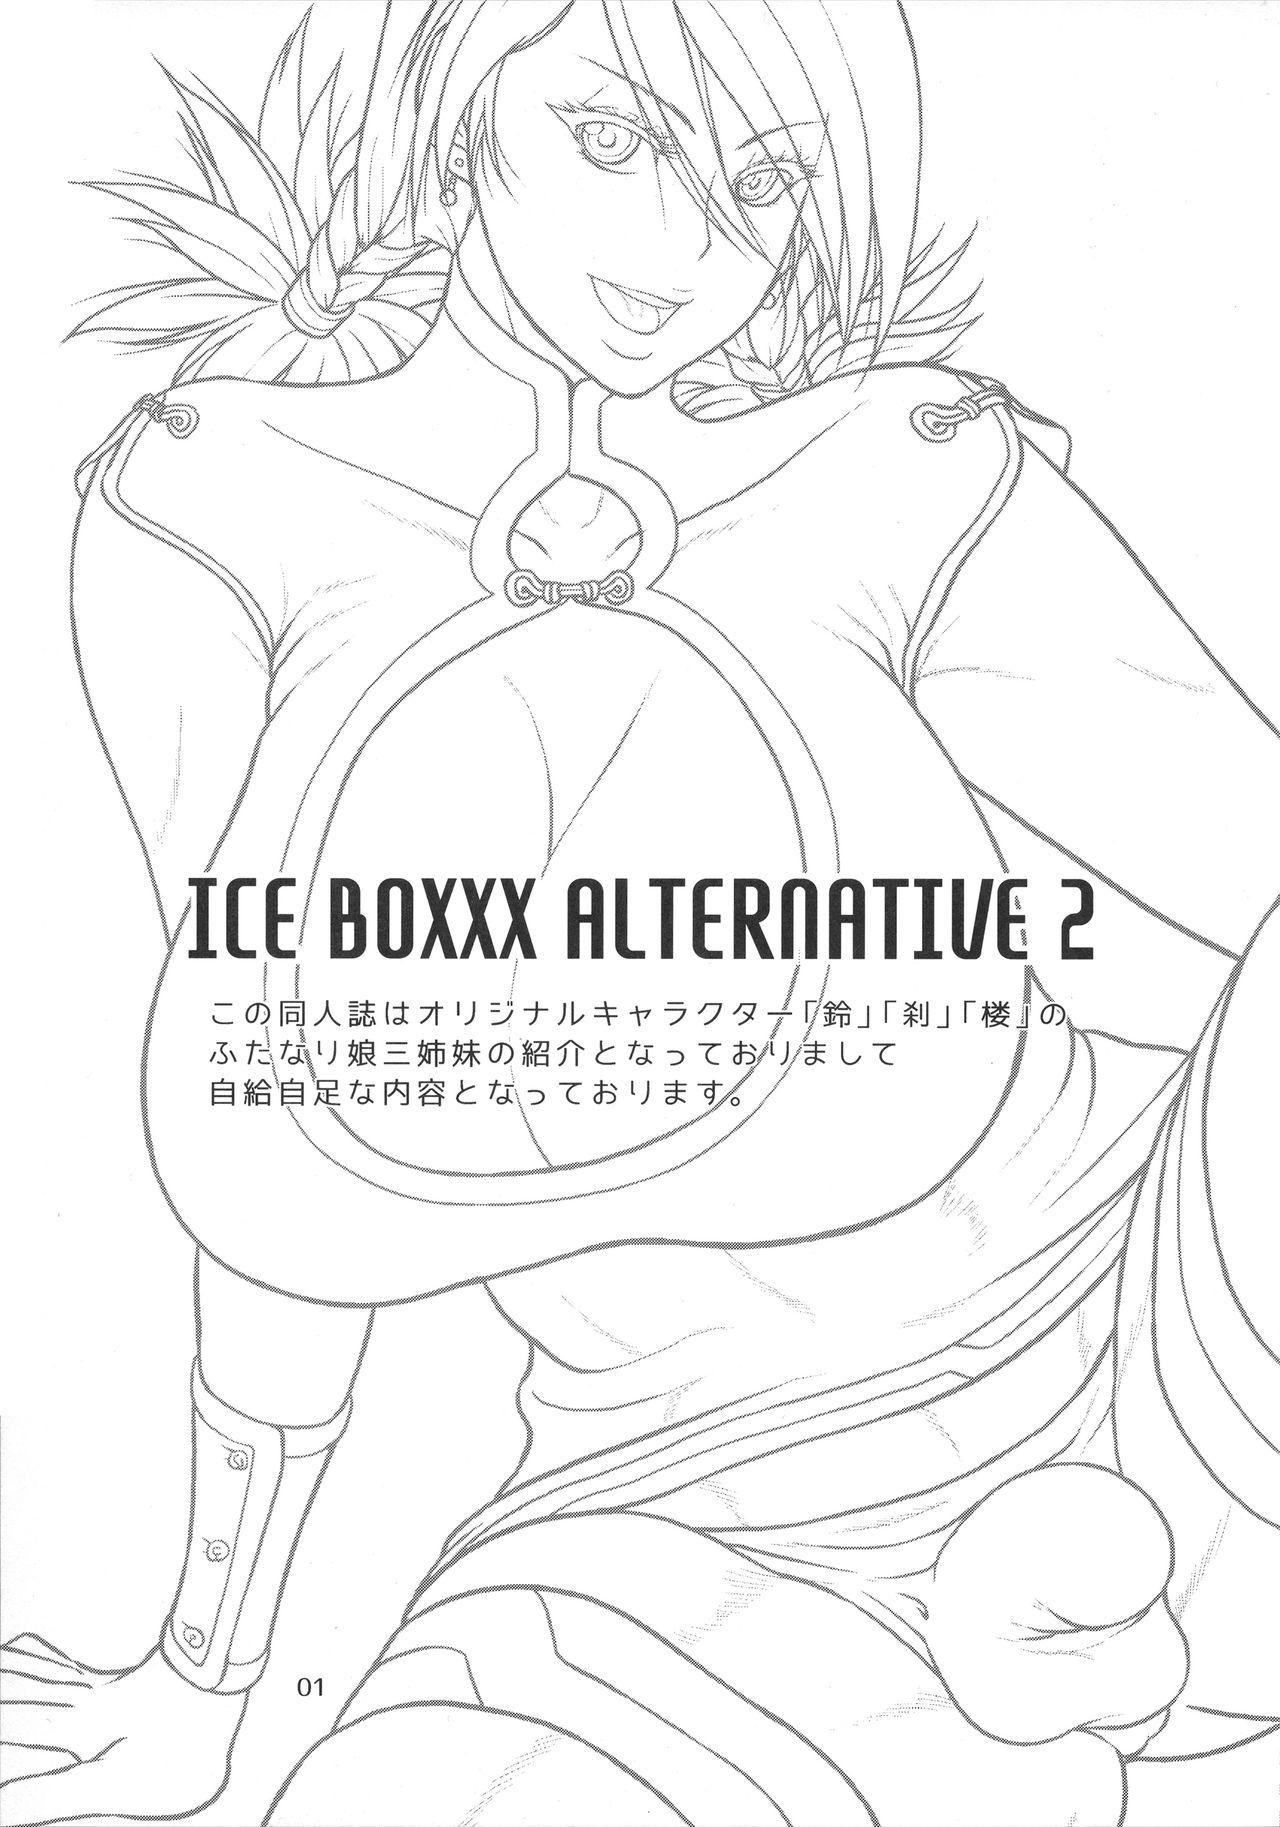 Chaturbate ICE BOXXX ALTERNATIVE 2 Funk - Page 2